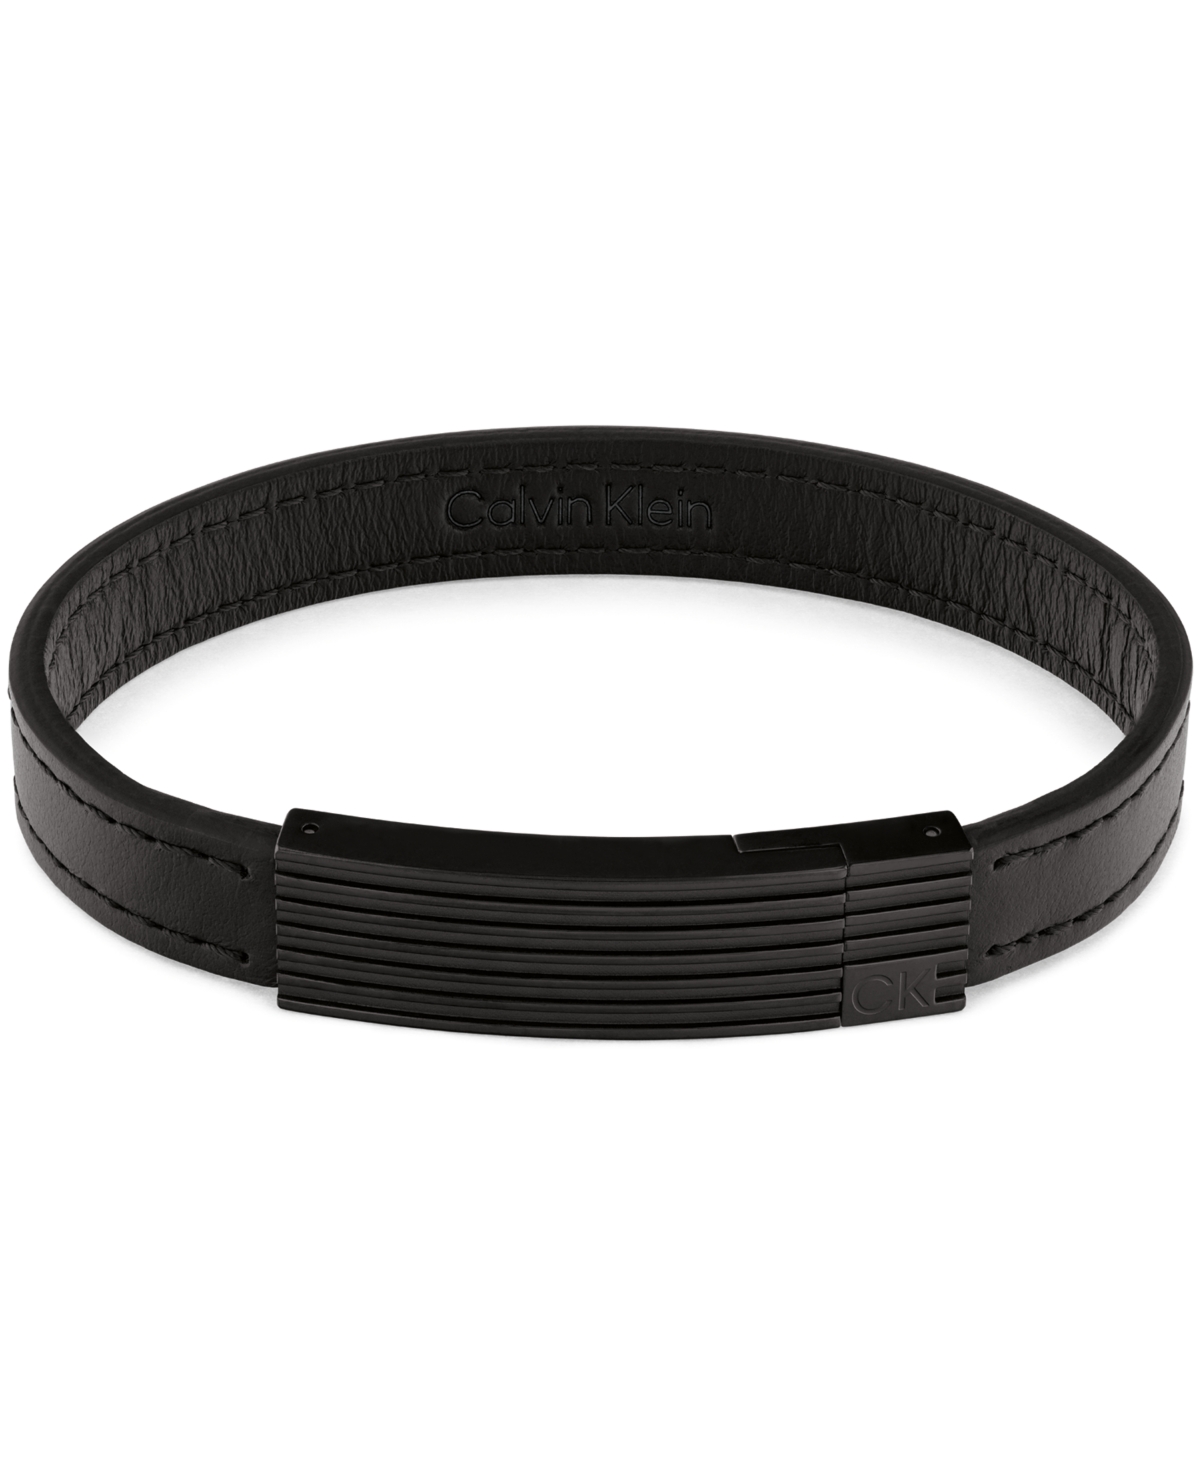 Men's Leather Bracelet - Black